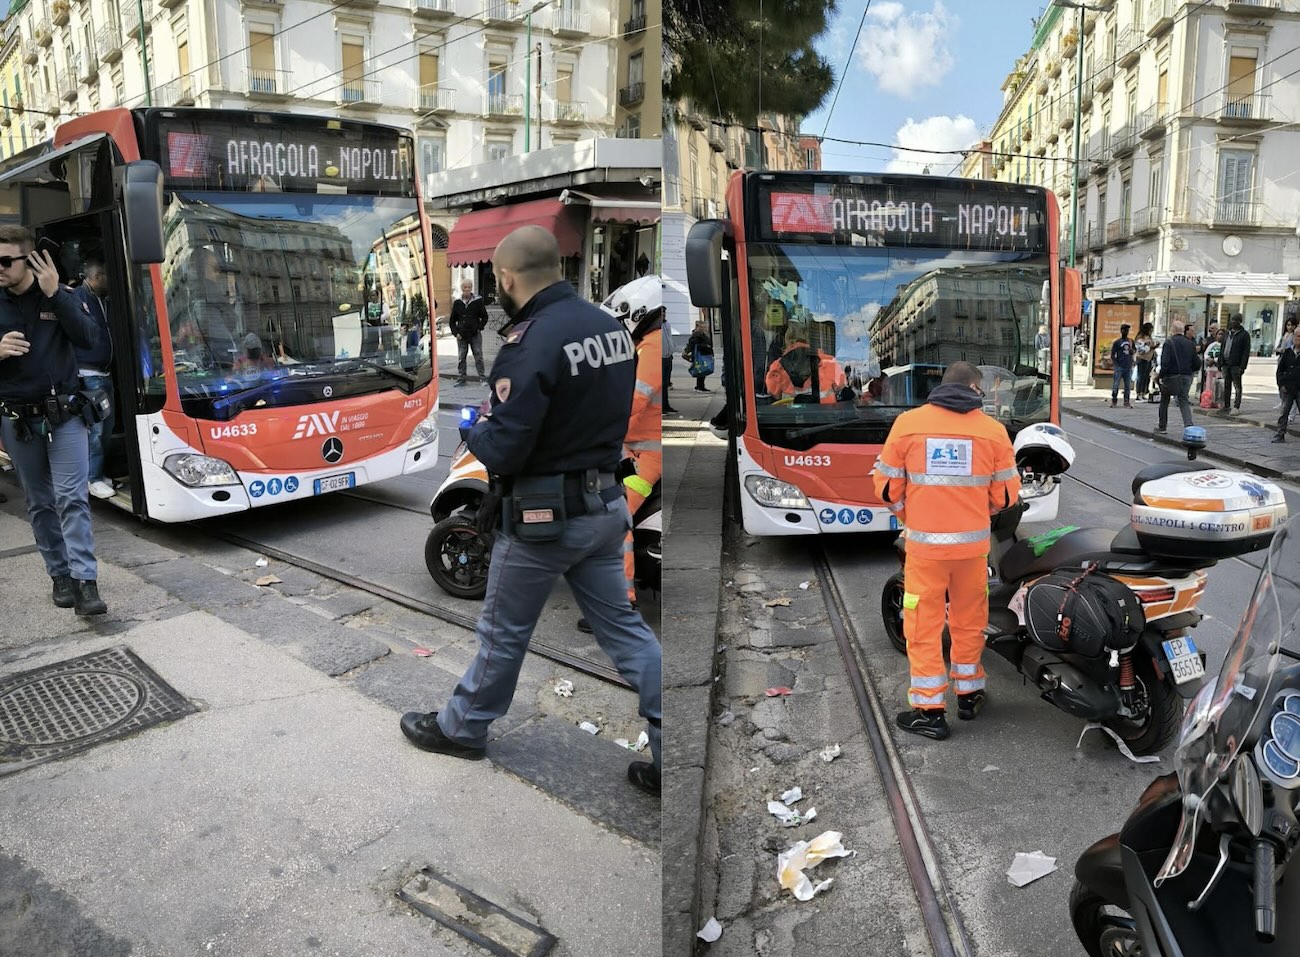 Napoli autsita bus picchiato